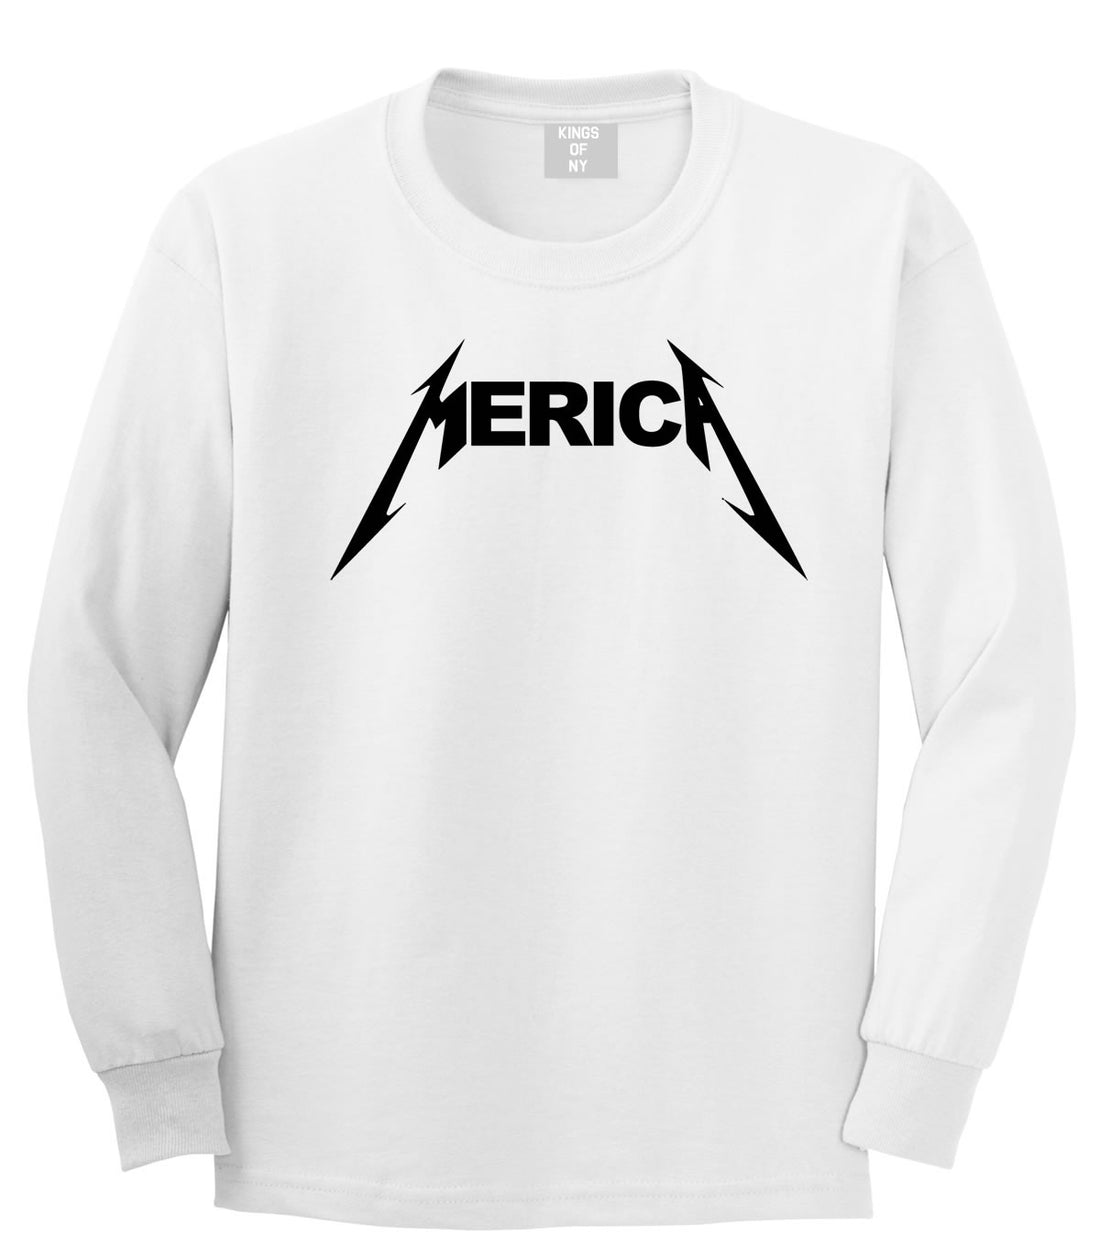 Merica Long Sleeve T-Shirt By Kings Of NY